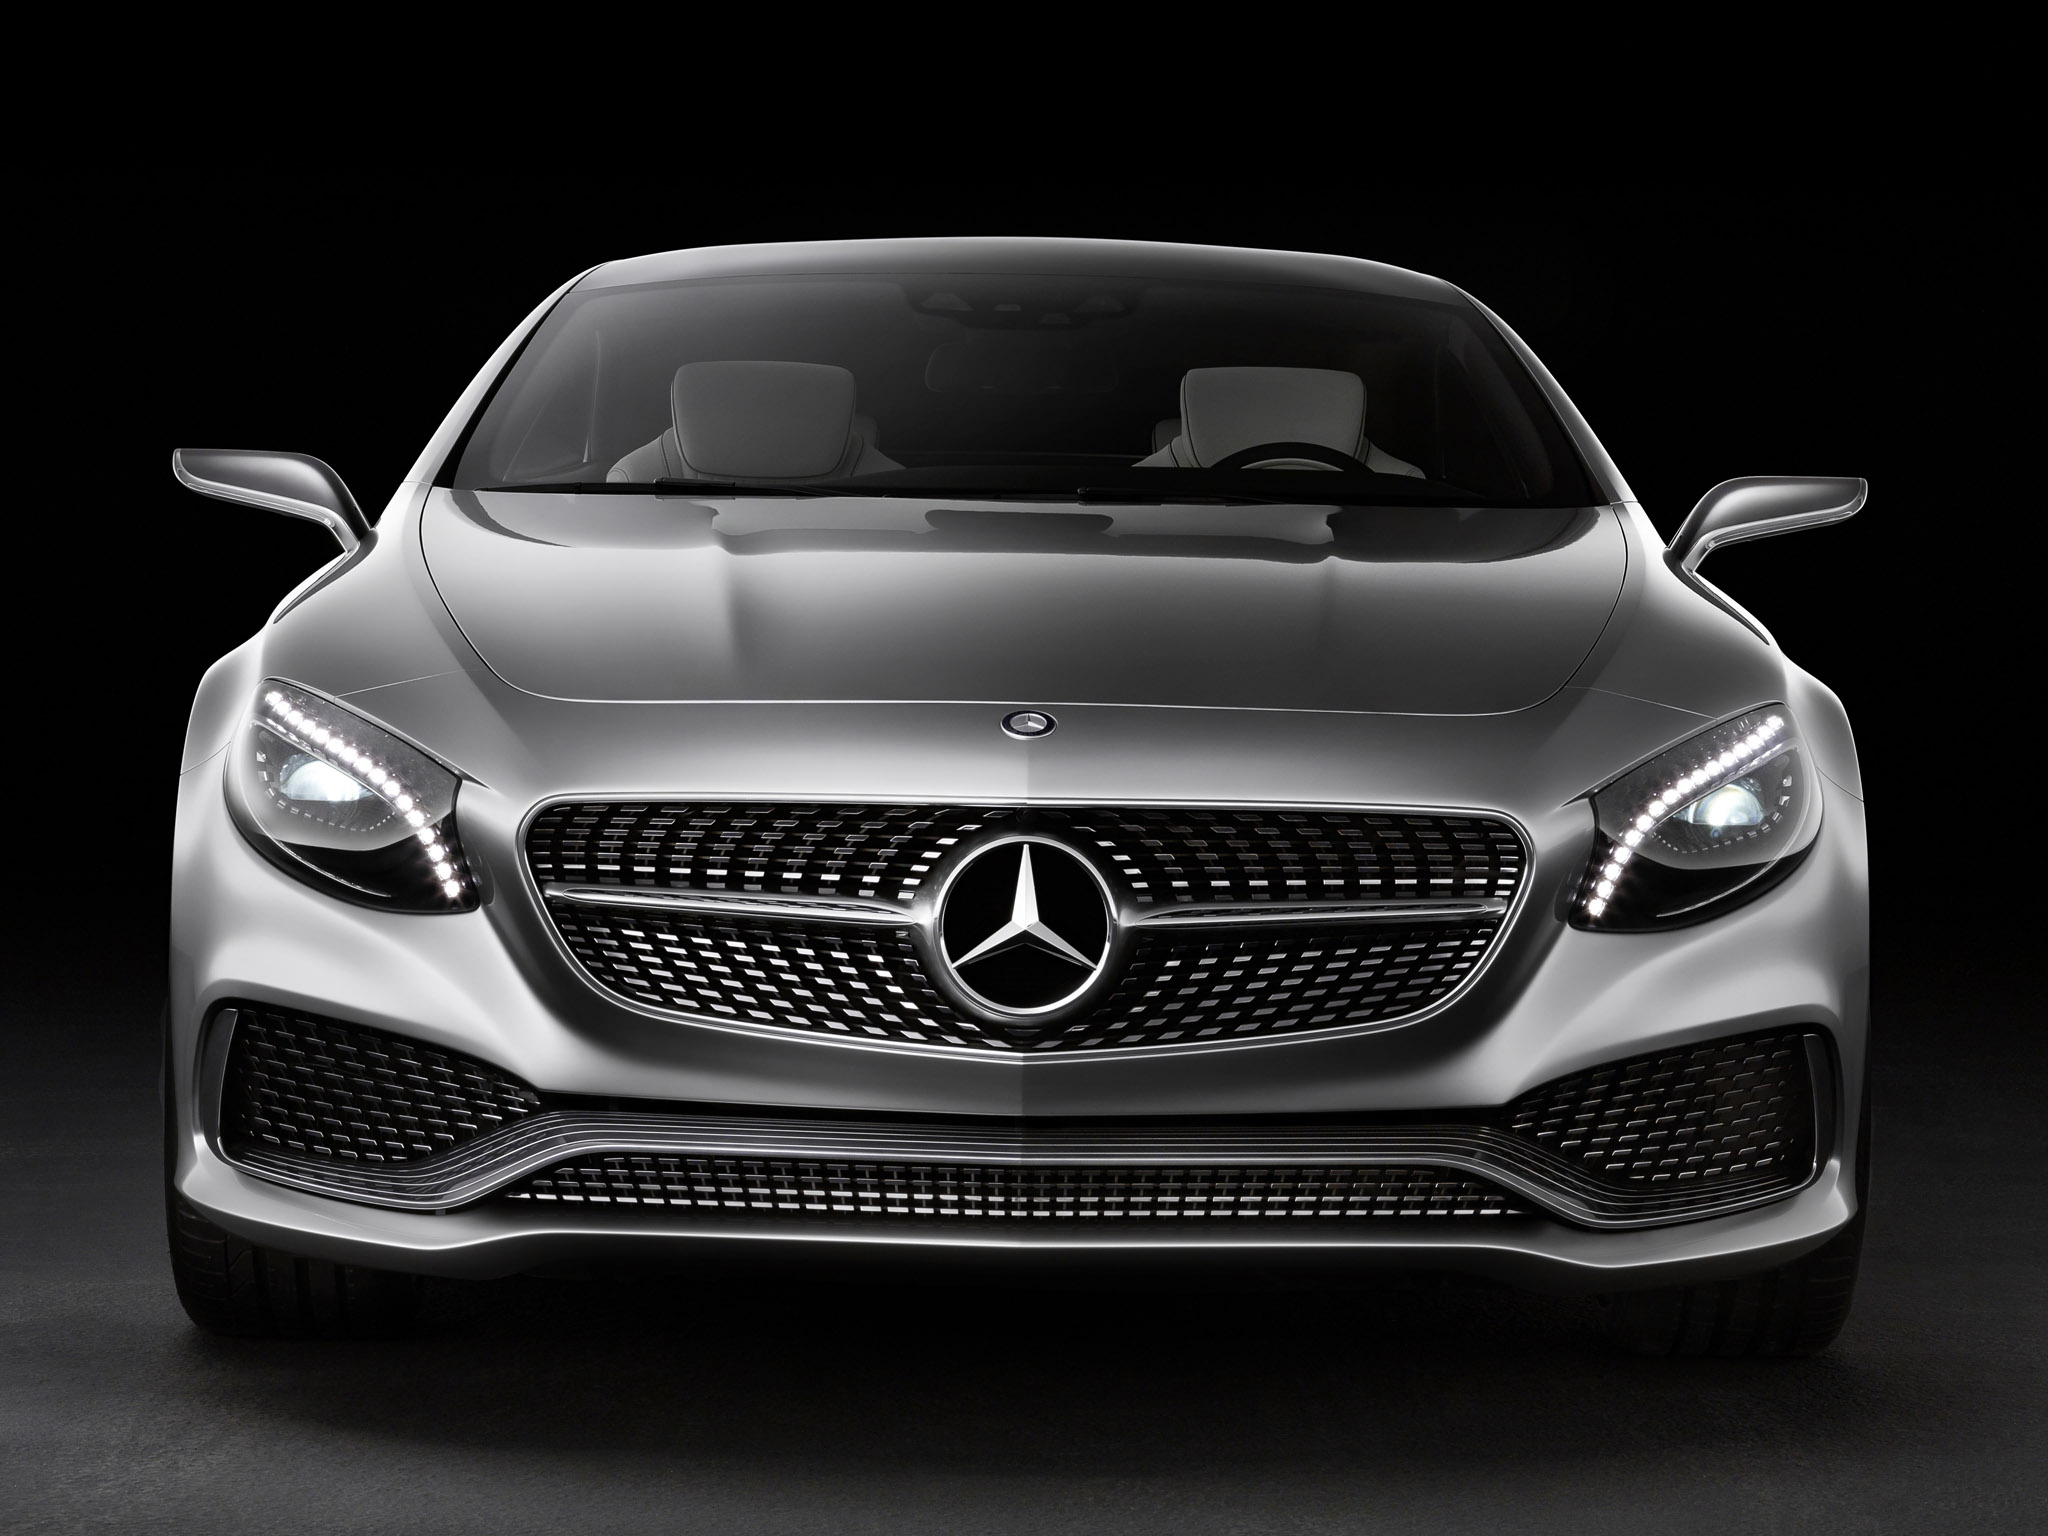 2013, Mercedes, Benz, S class, Coupe, Concept Wallpaper